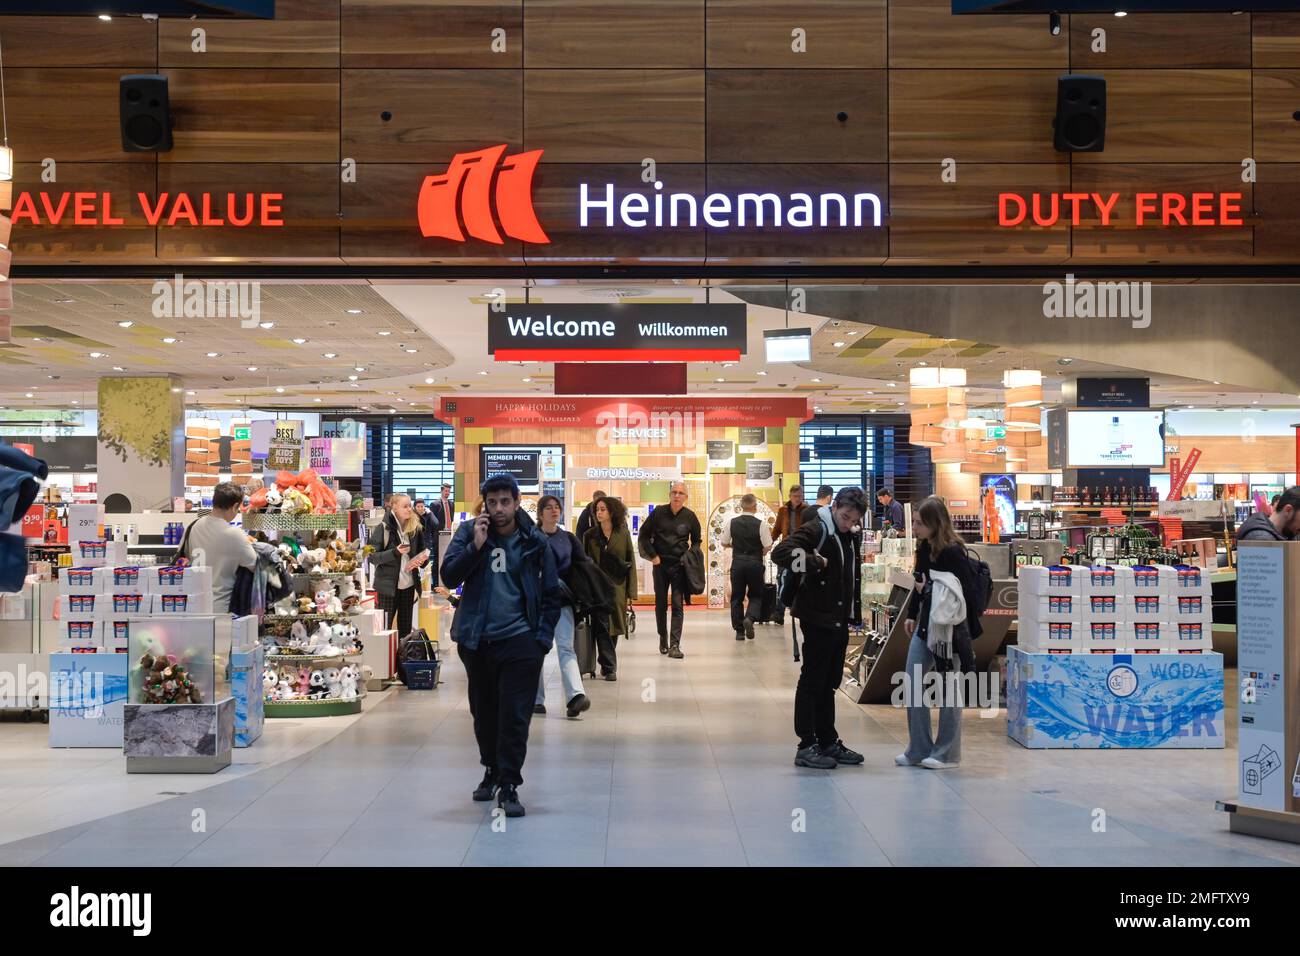 Heinemann Dutyfree Travel Value Shop, Main Building, Terminal 1, BER Airport, Berlin-Brandenburg, Germany Stock Photo